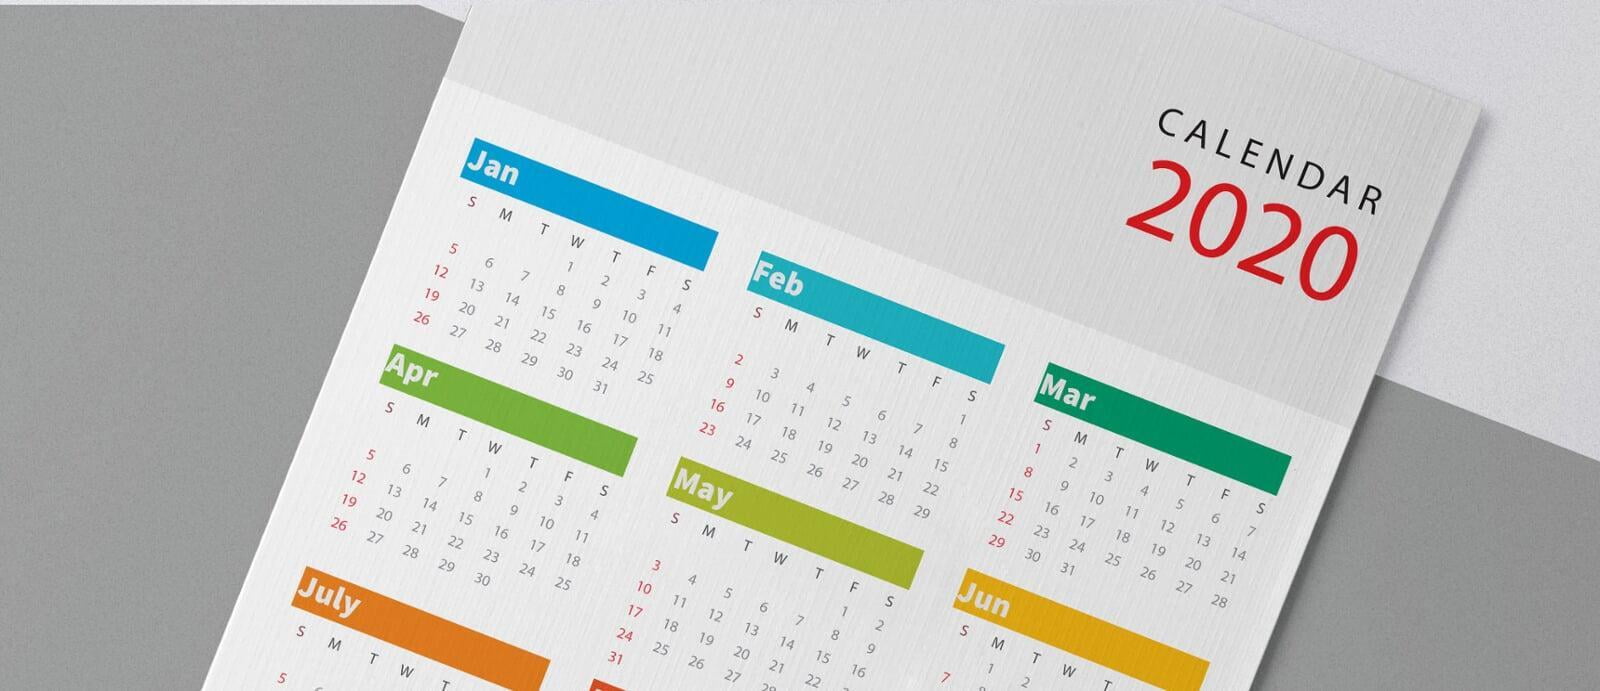 2020 Bank Holiday Calendar